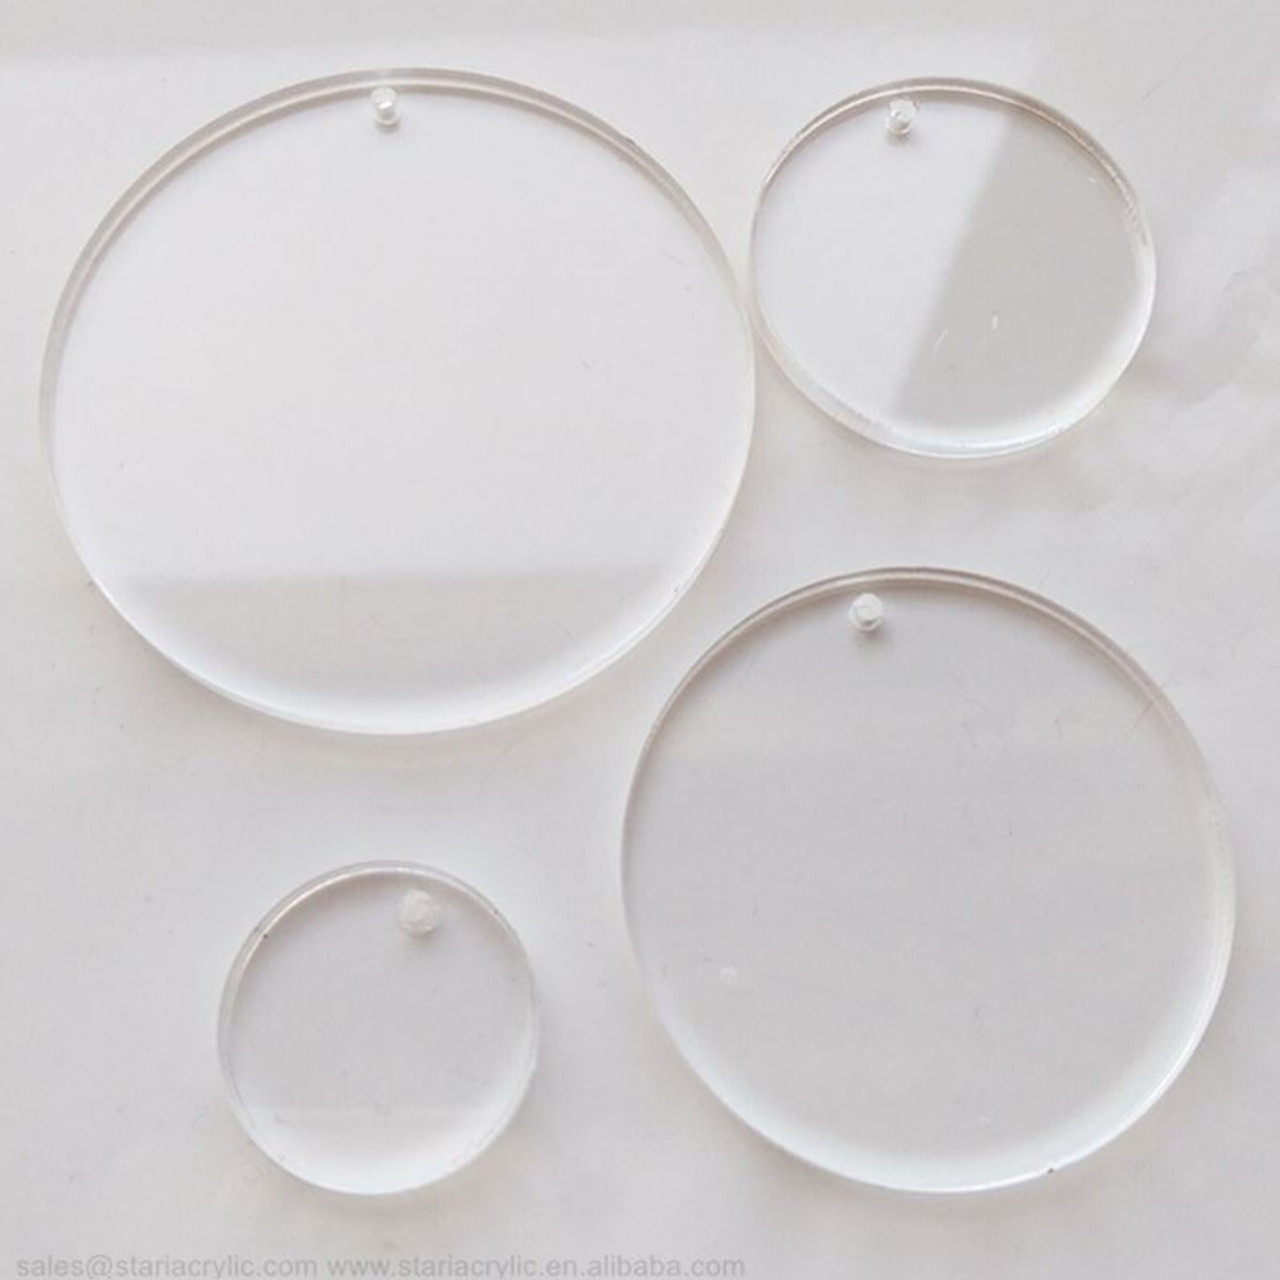 100 Laser Cut Clear Acrylic Blank Round Discs Smooth Edge